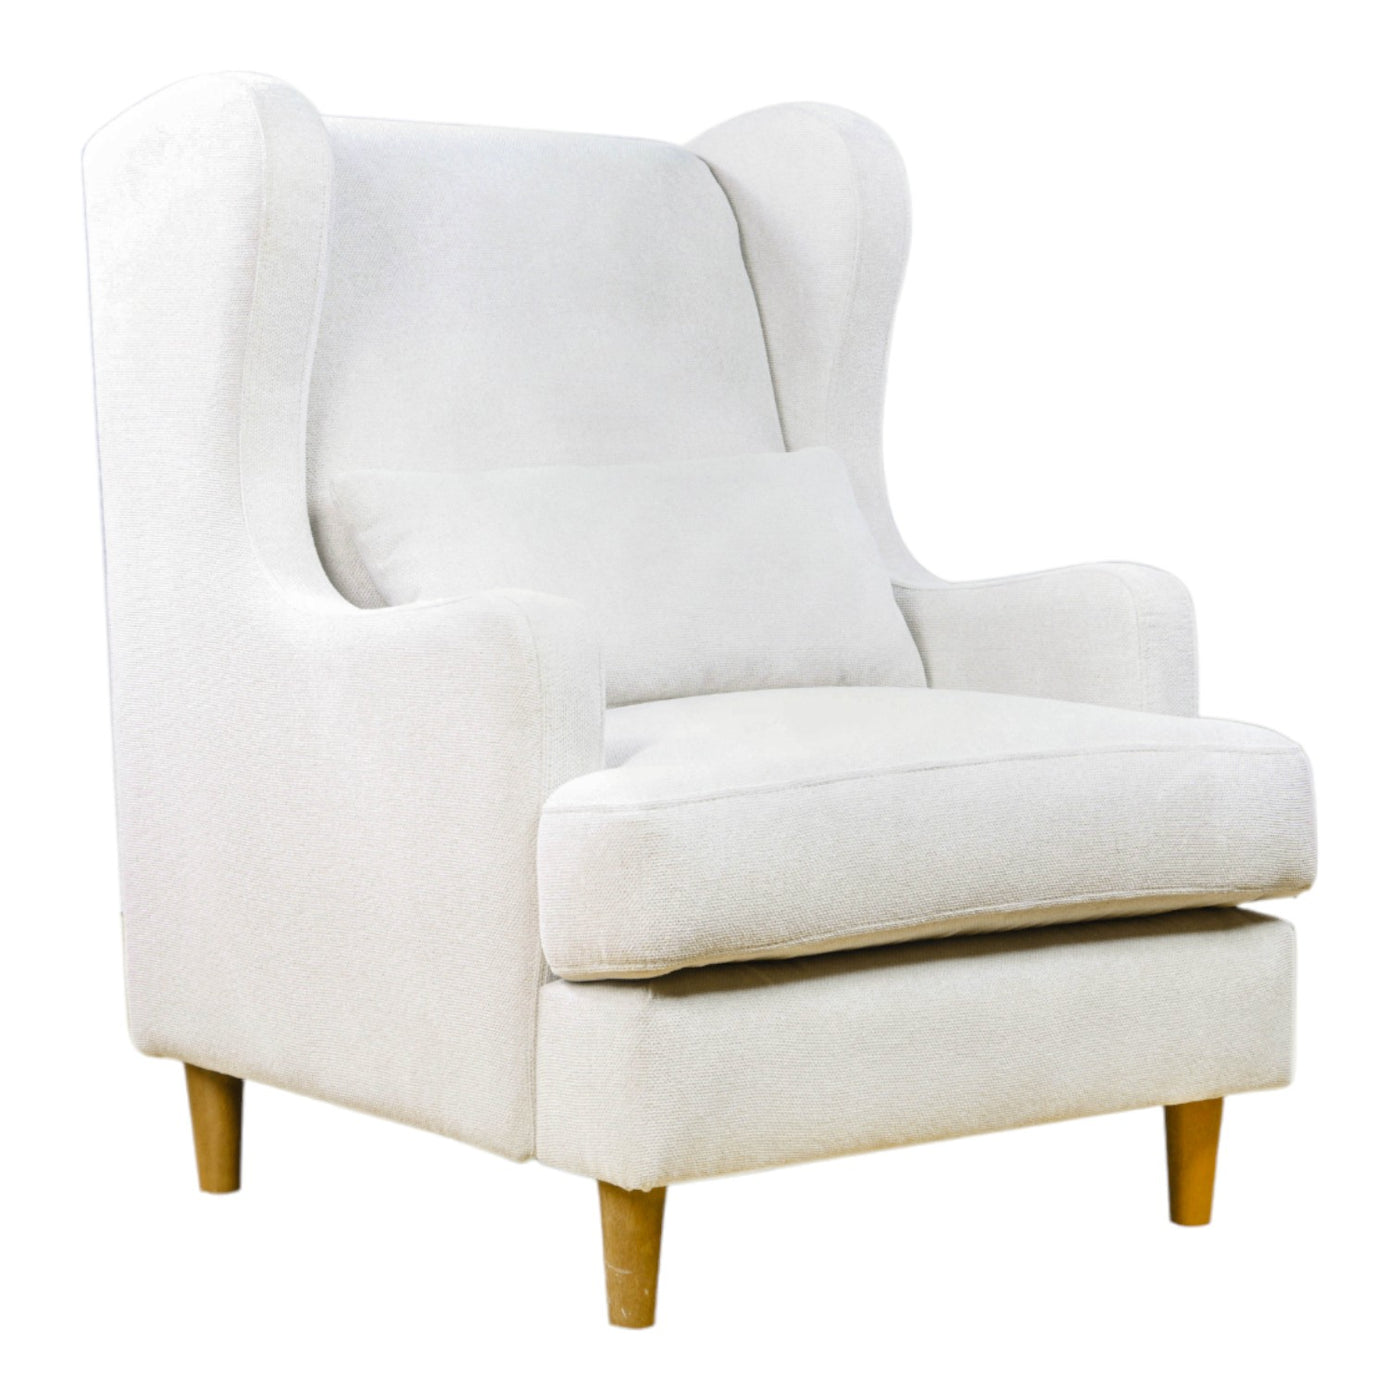 Monarchy Chair Beige - Future Classics Furniture